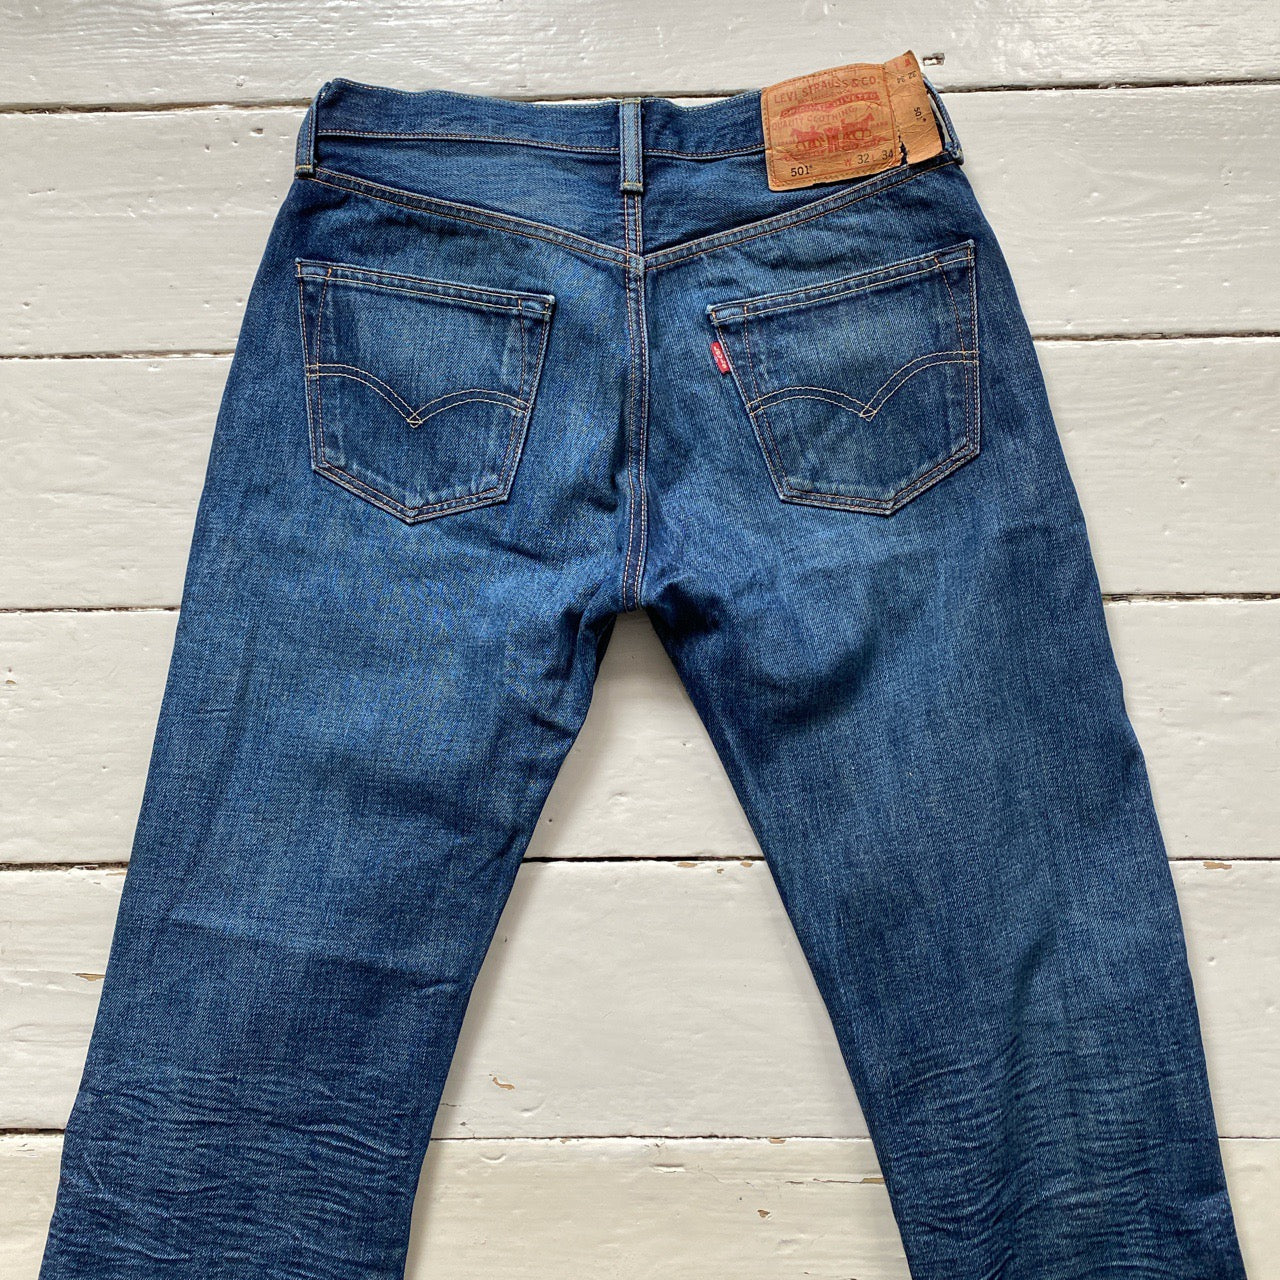 Levis 501 Navy Jeans (32/34)